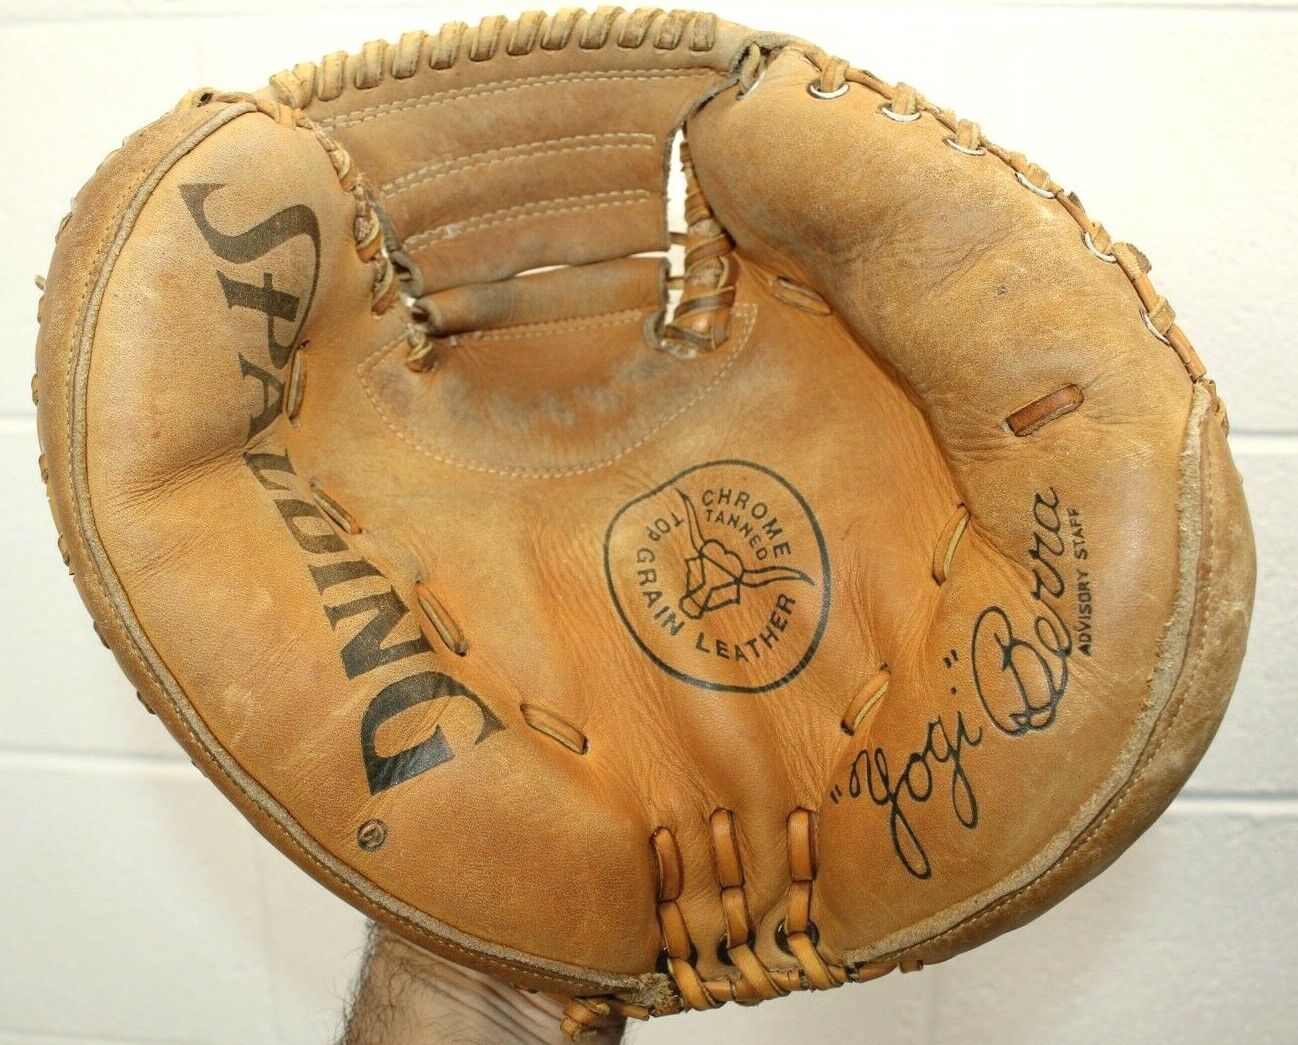 Vintage Yogi Berra Spalding Baseball Glove RHT 42-7517 Catcher Mitt Leather 31.5